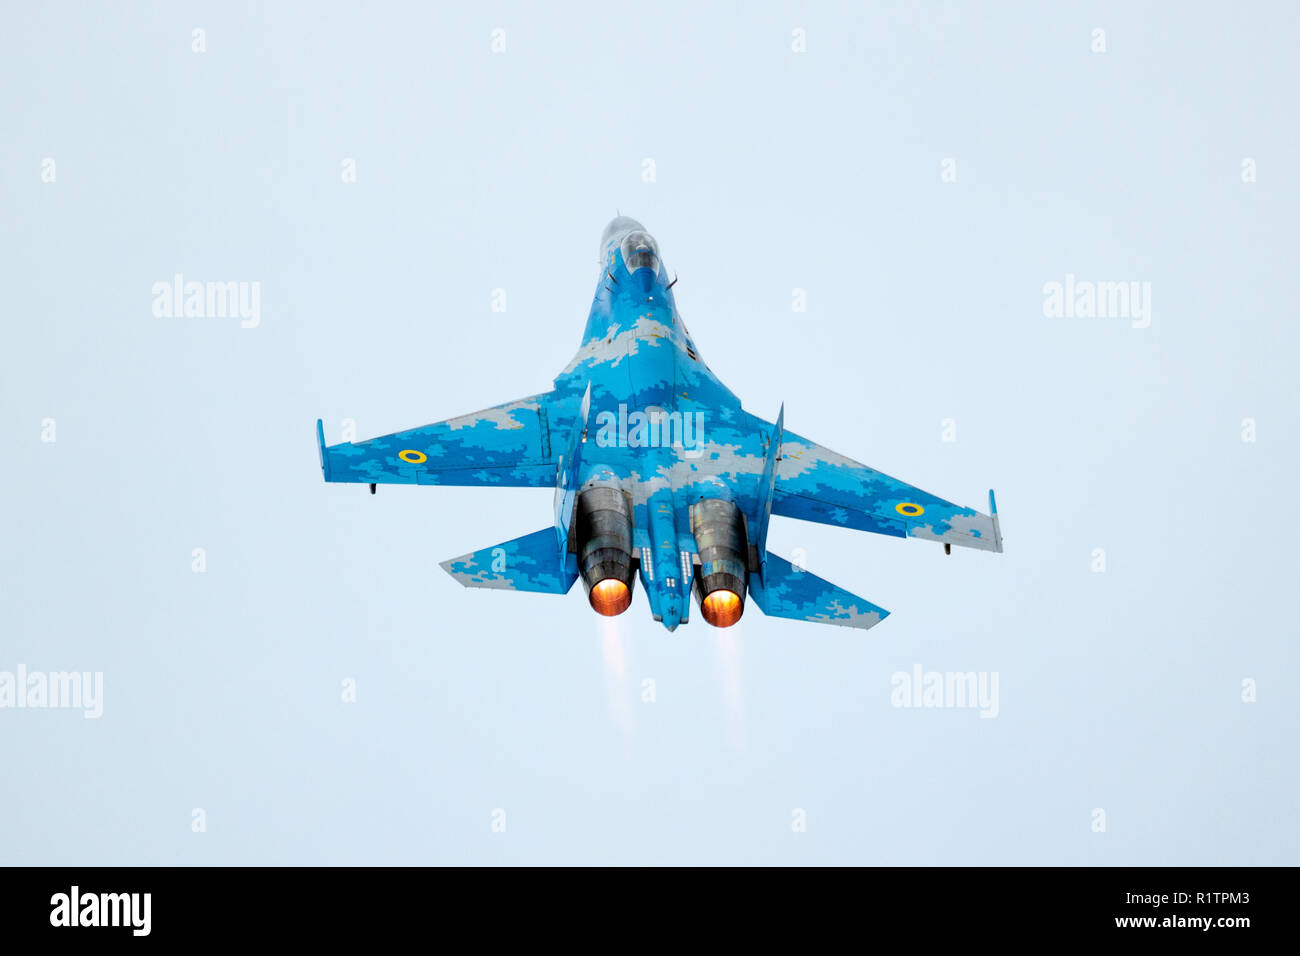 KLEINE BROGEL, Belgio - 8 Sep, 2018: Ucraina Air Force Sukhoi Su-27 Flanker jet da combattimento aereo decollare con afterburner da di Kleine-Brogel Foto Stock